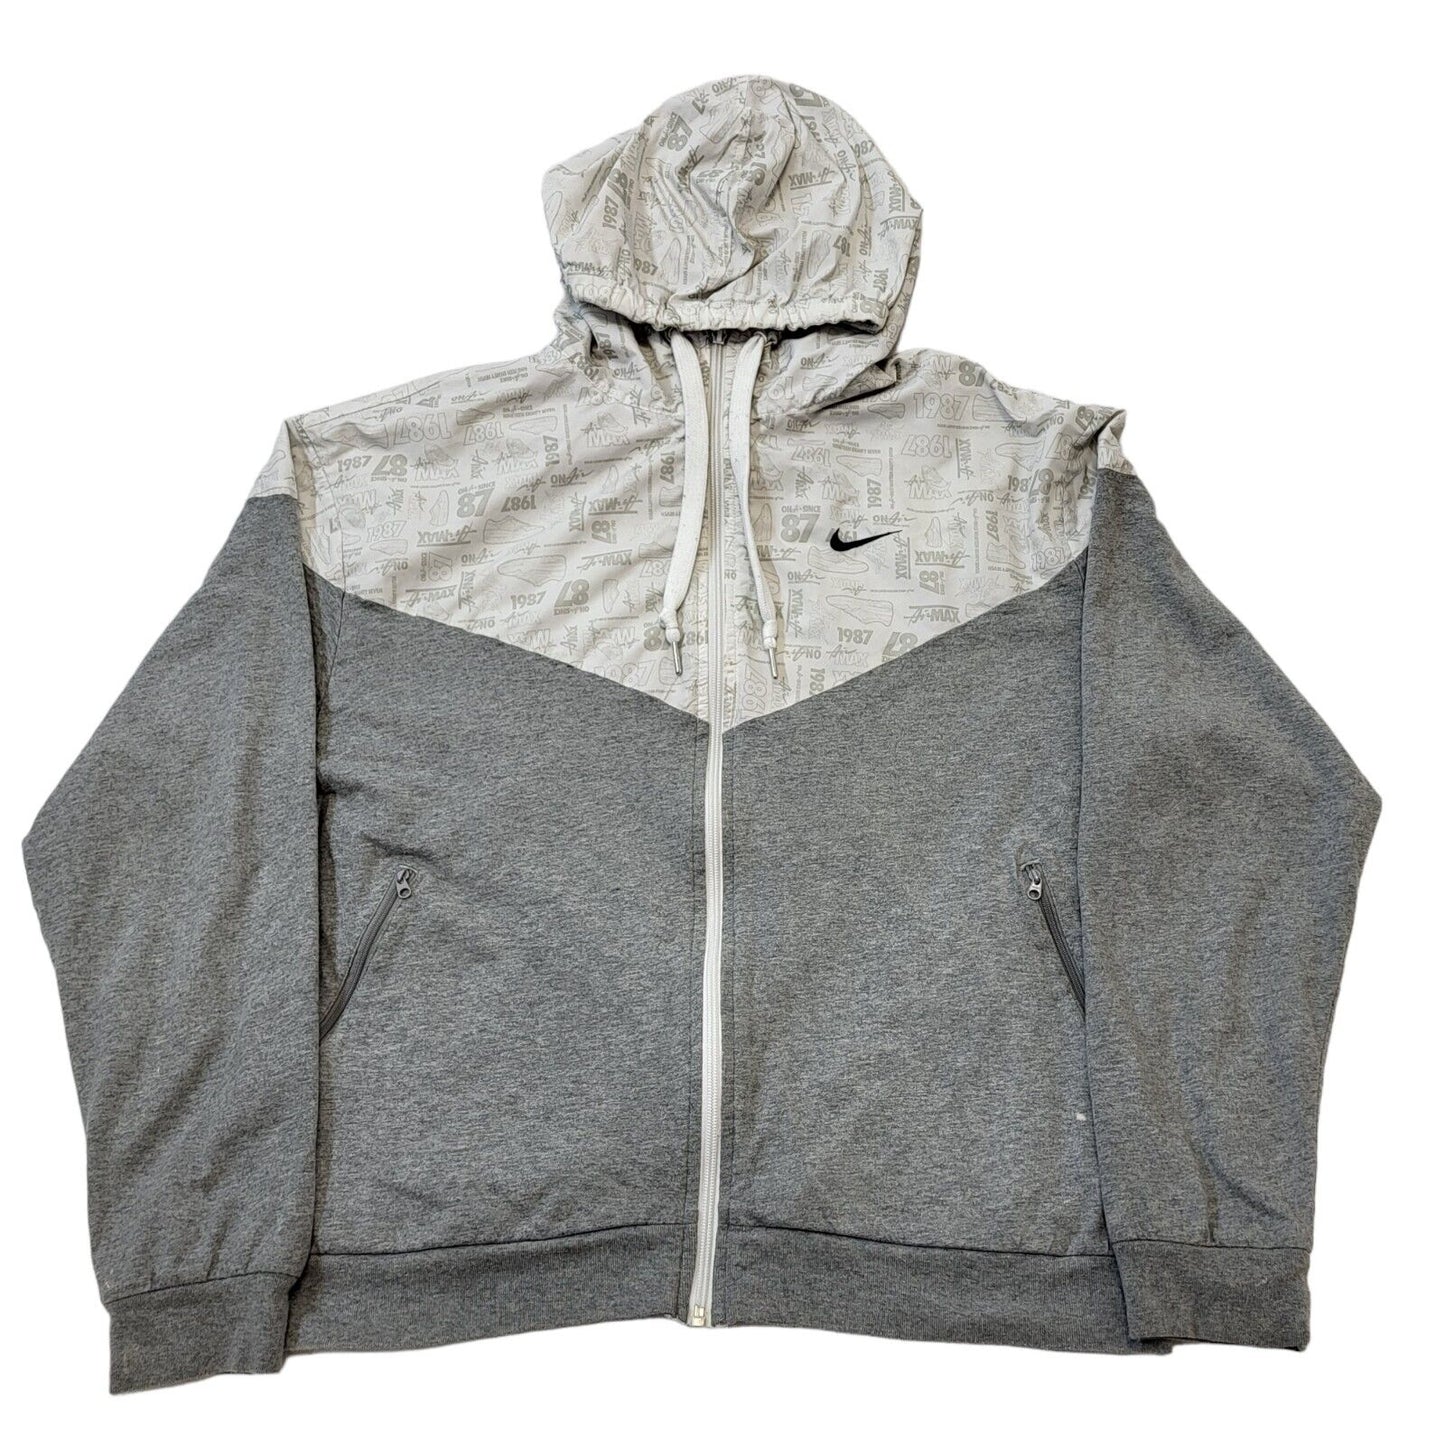 Nike Jacket (XL)